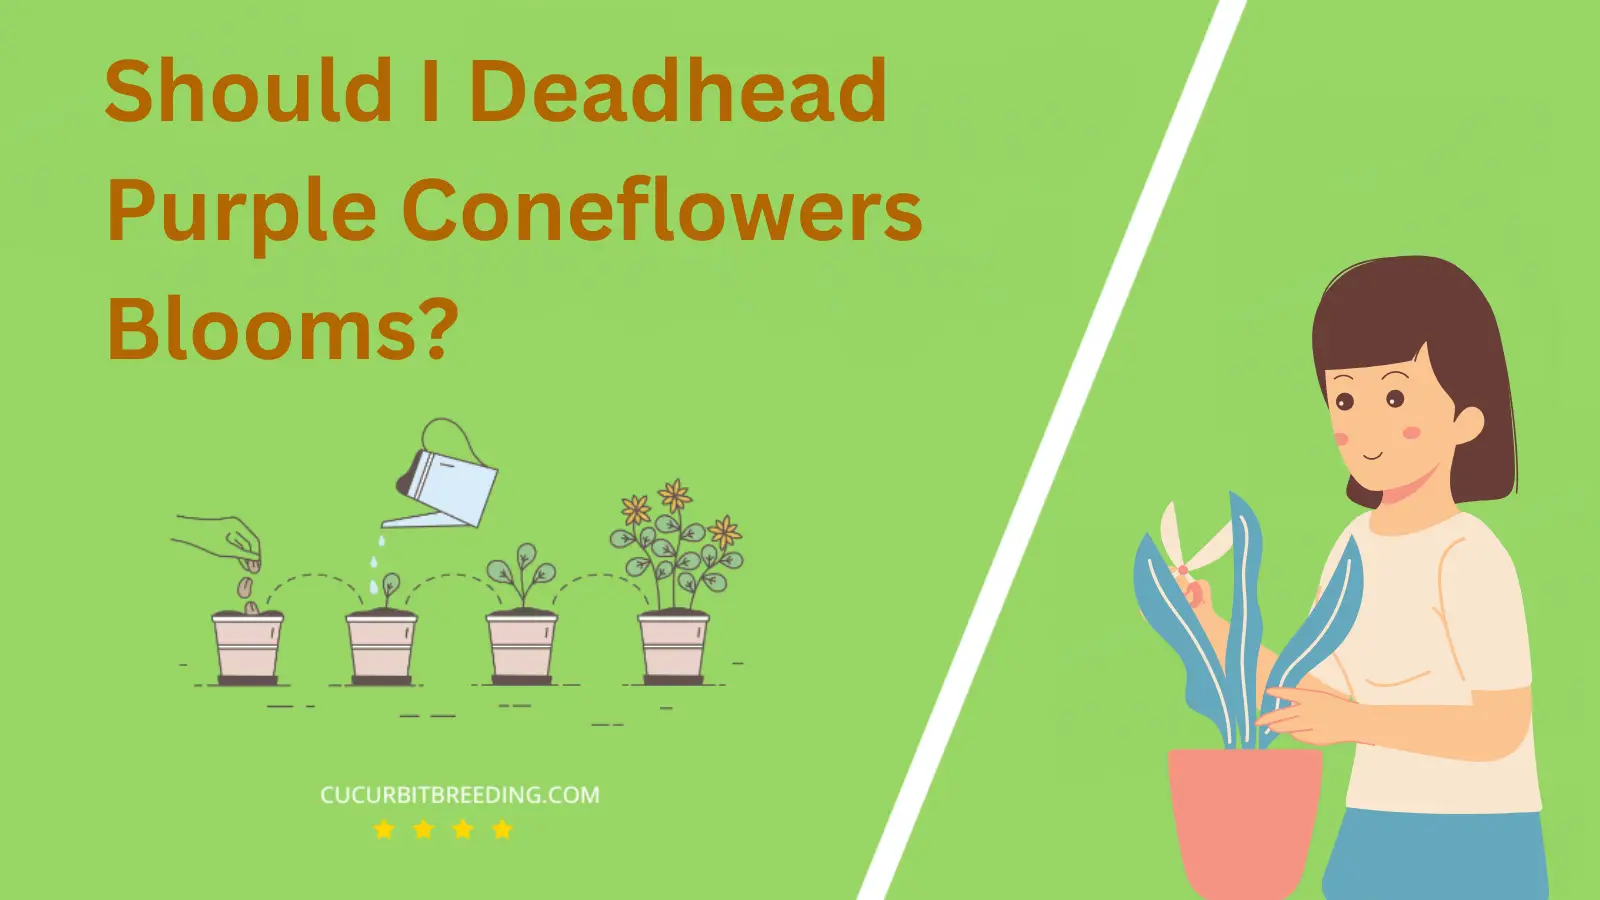 Should I Deadhead Purple Coneflowers Blooms?